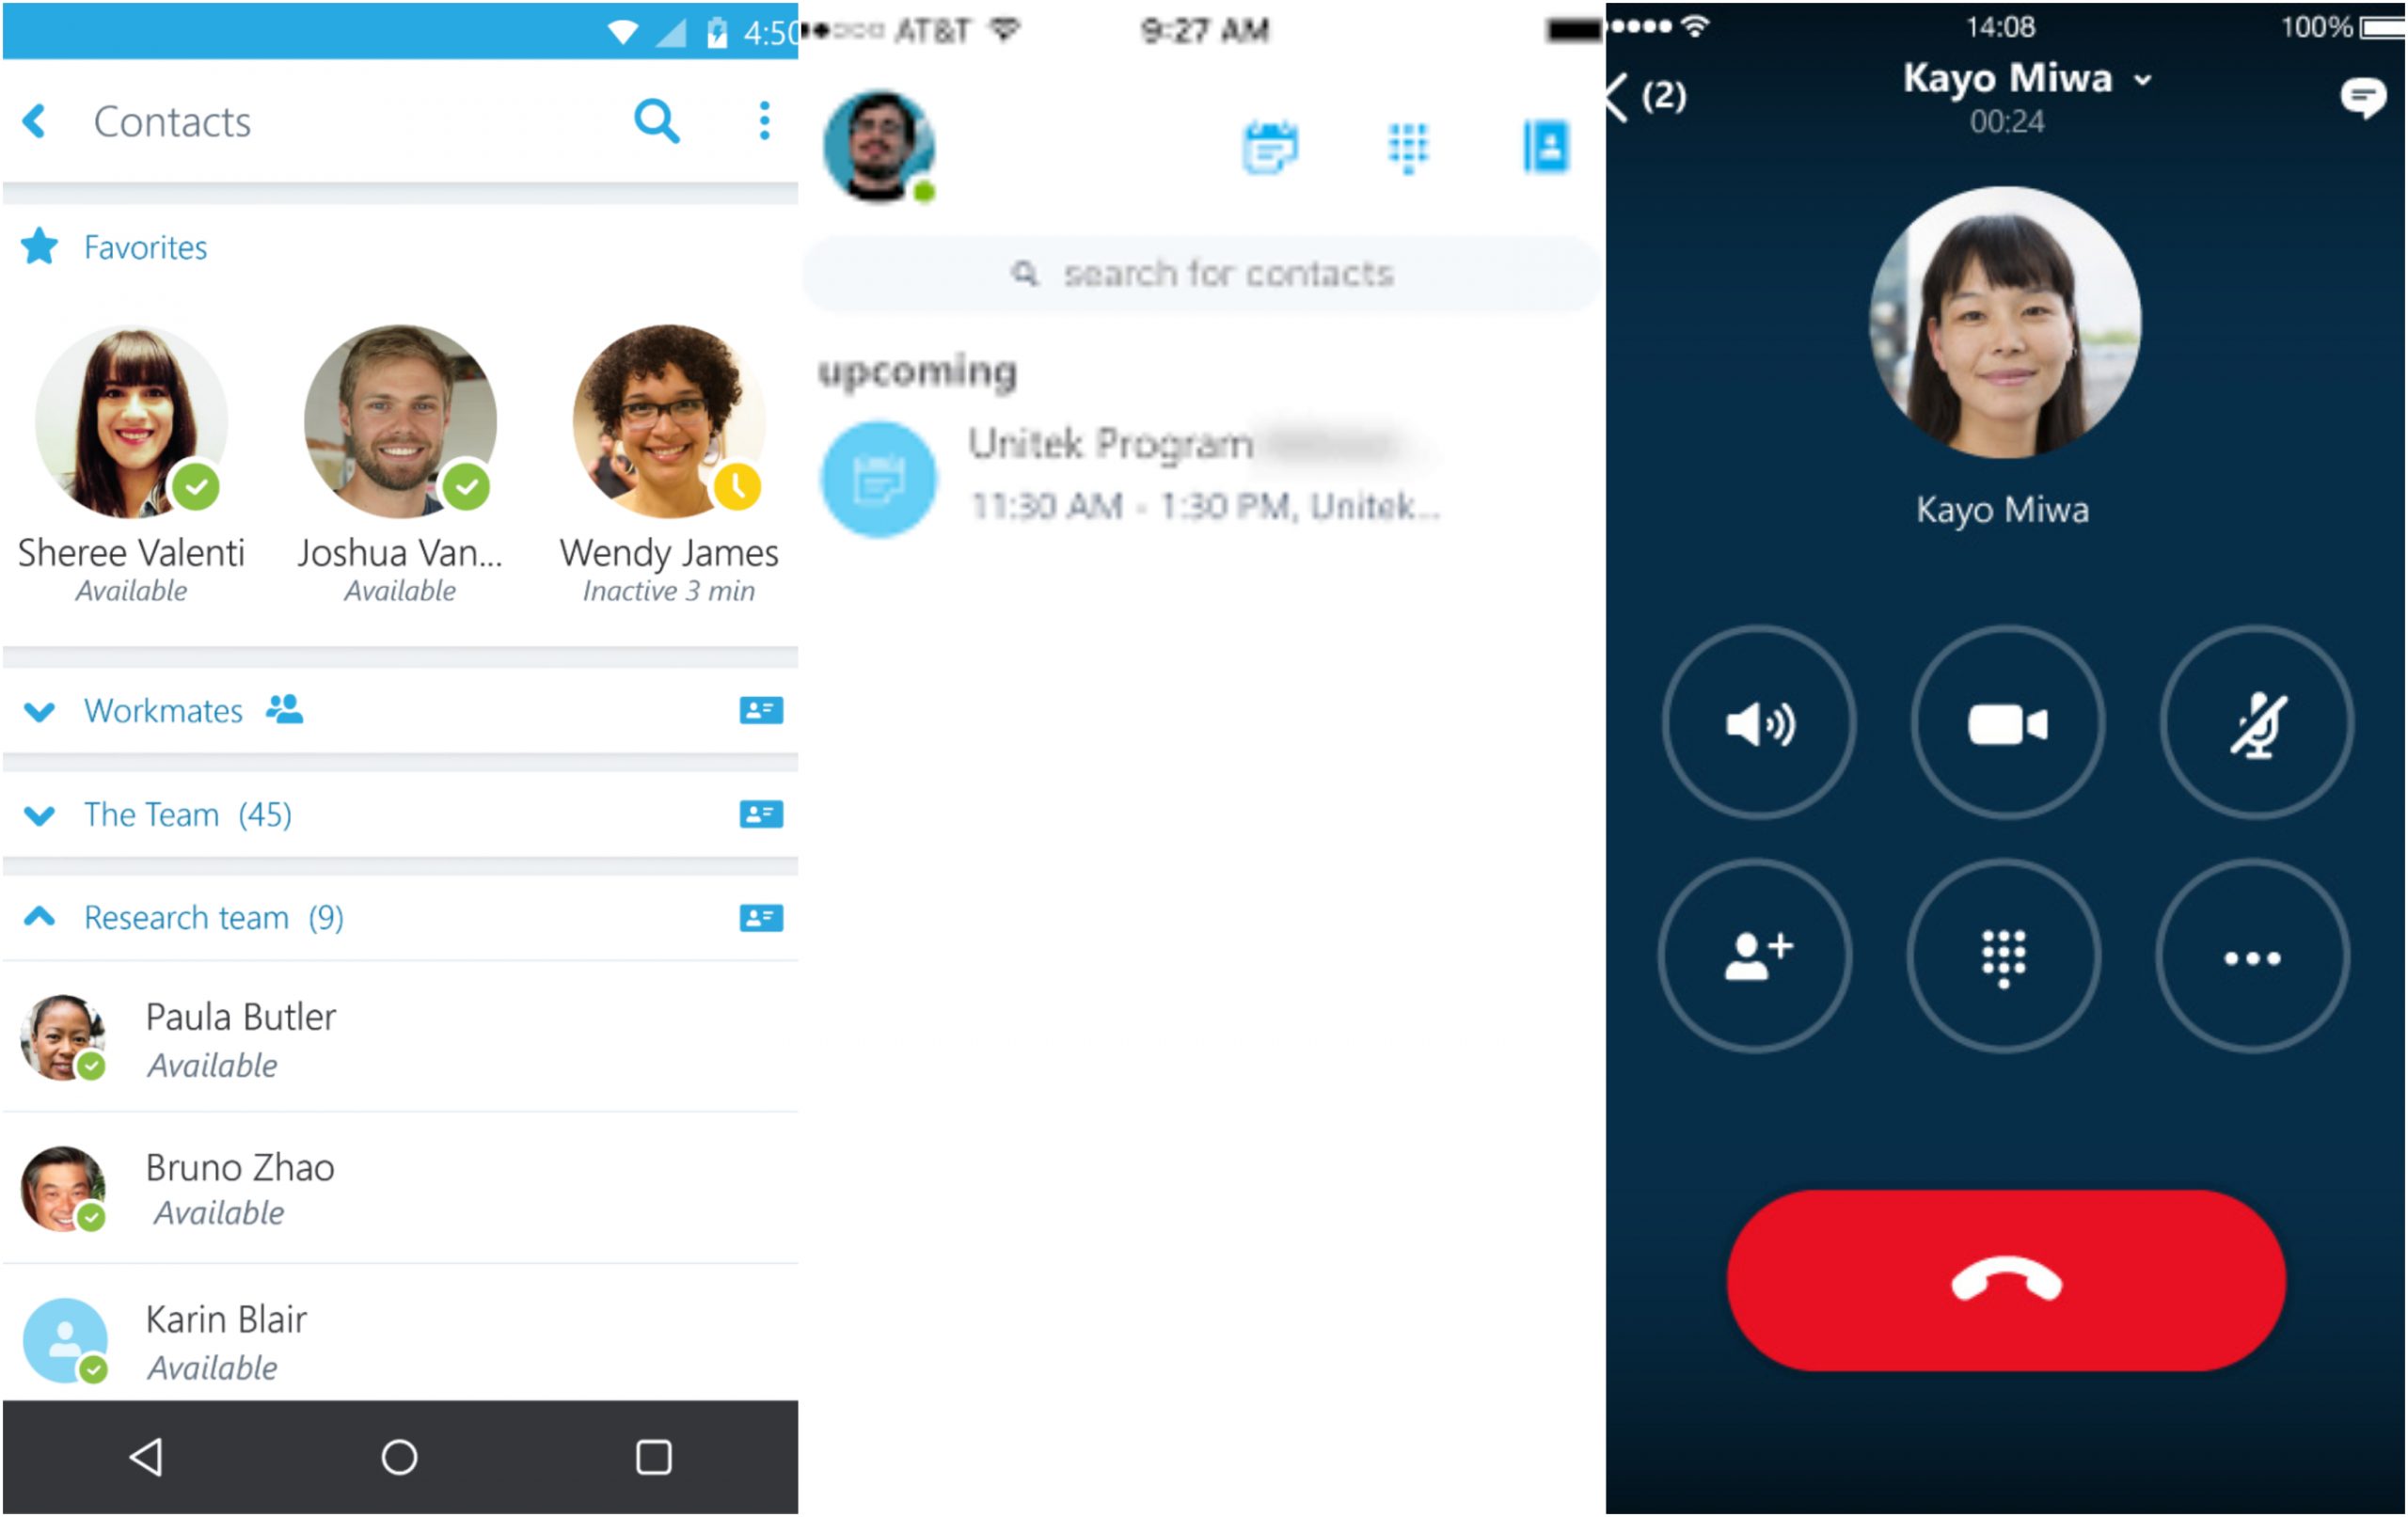 Skype For Business